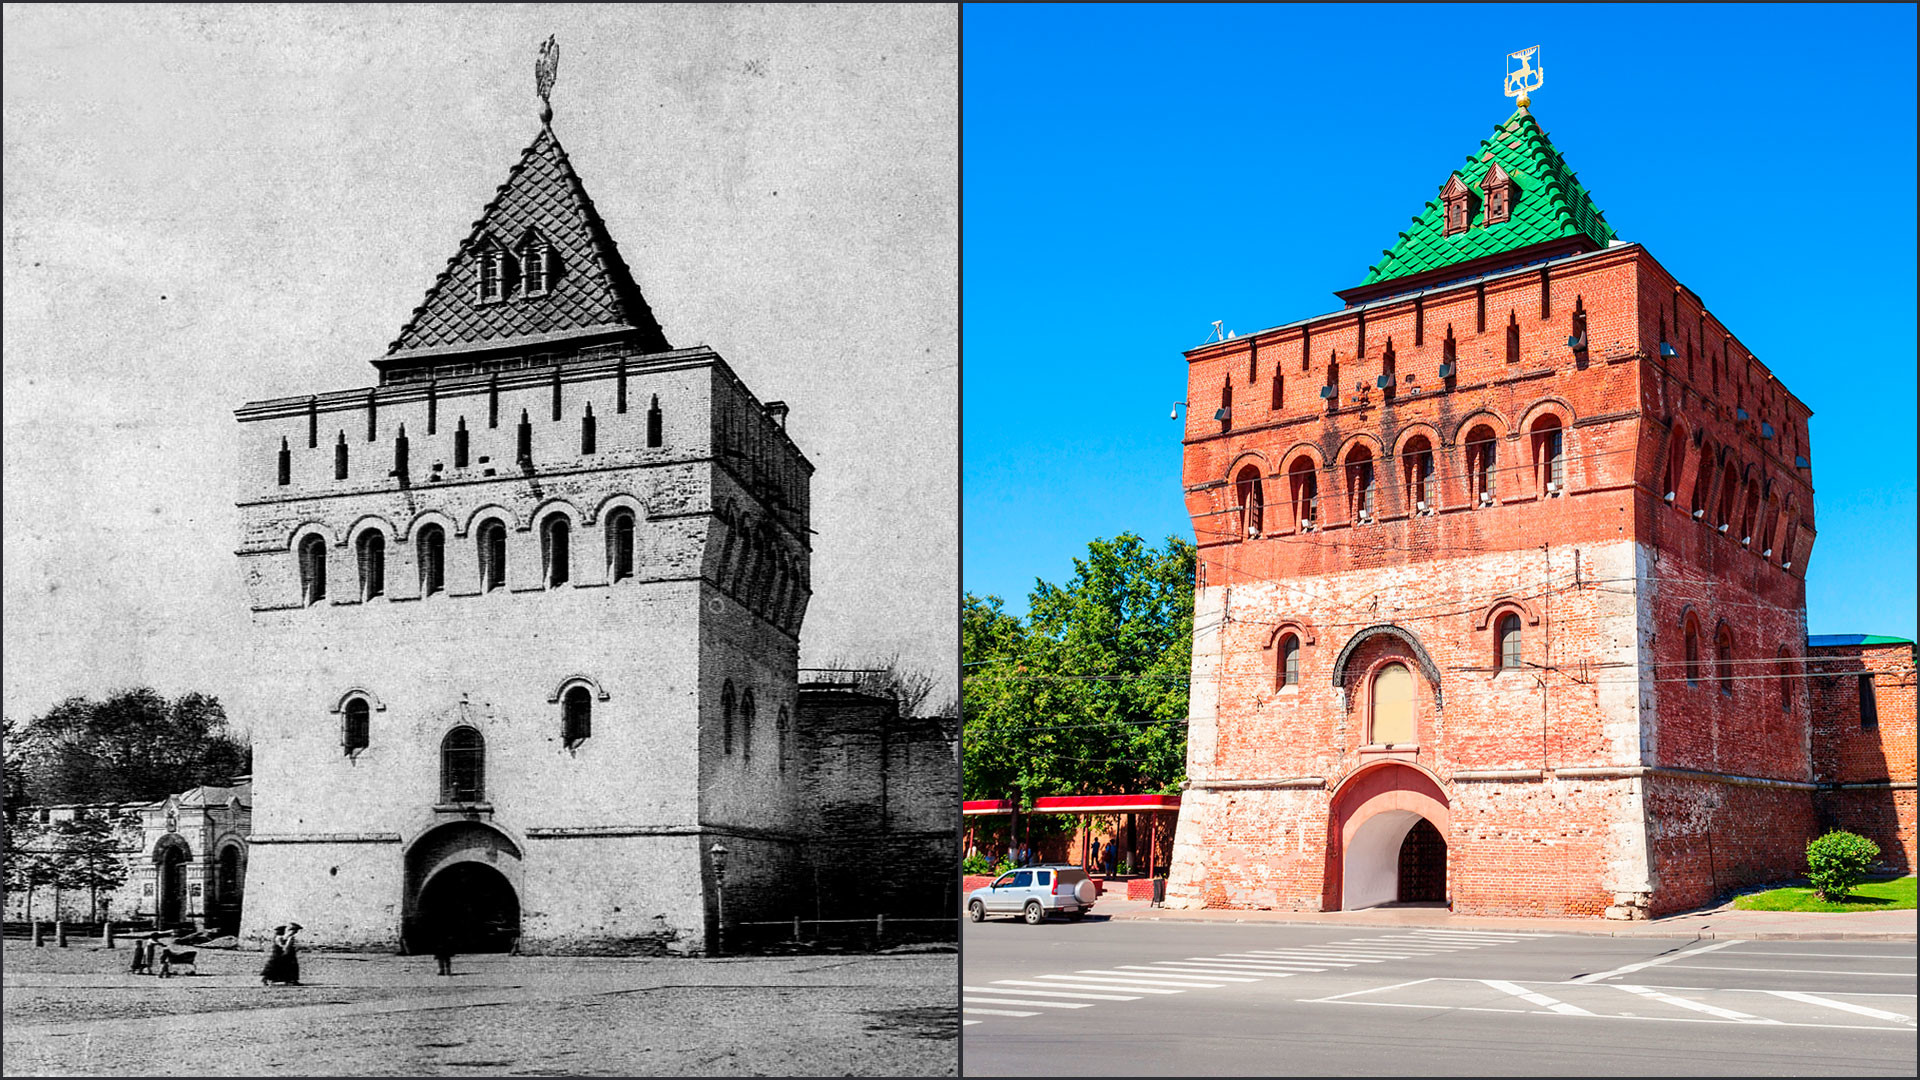 Dmitrievskaya Tower through the centuries.